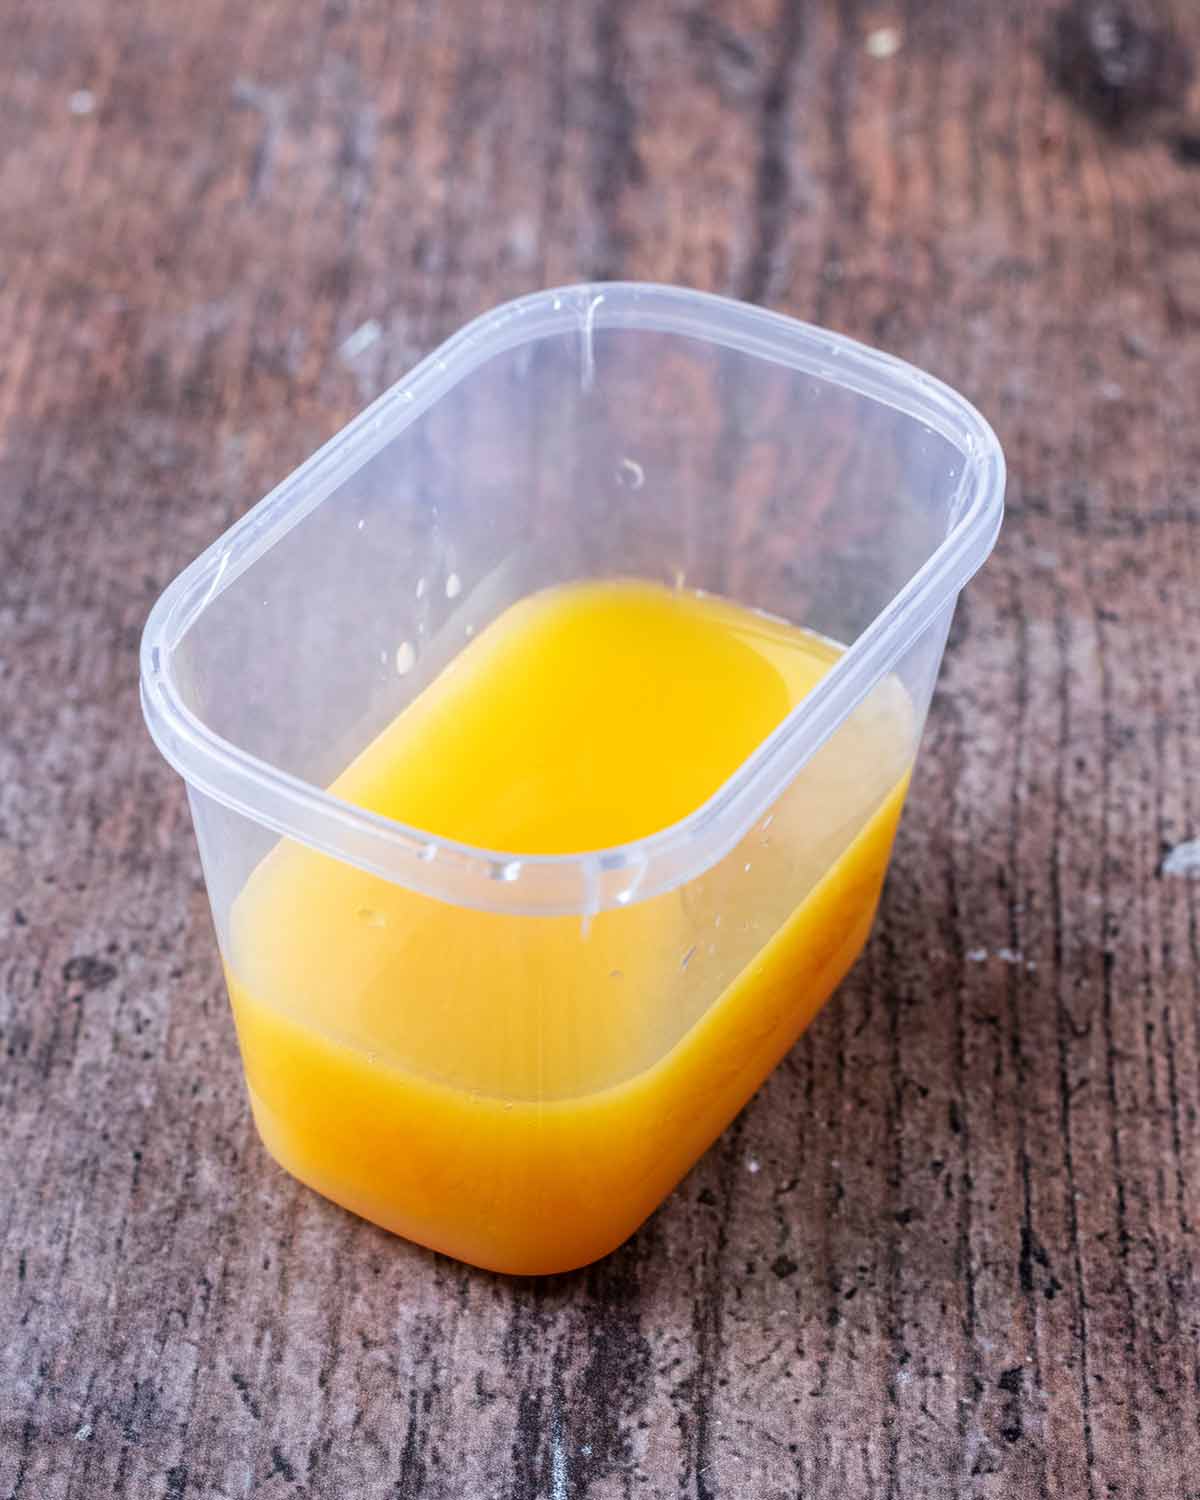 A small plastic tup containing liquid orange jelly.